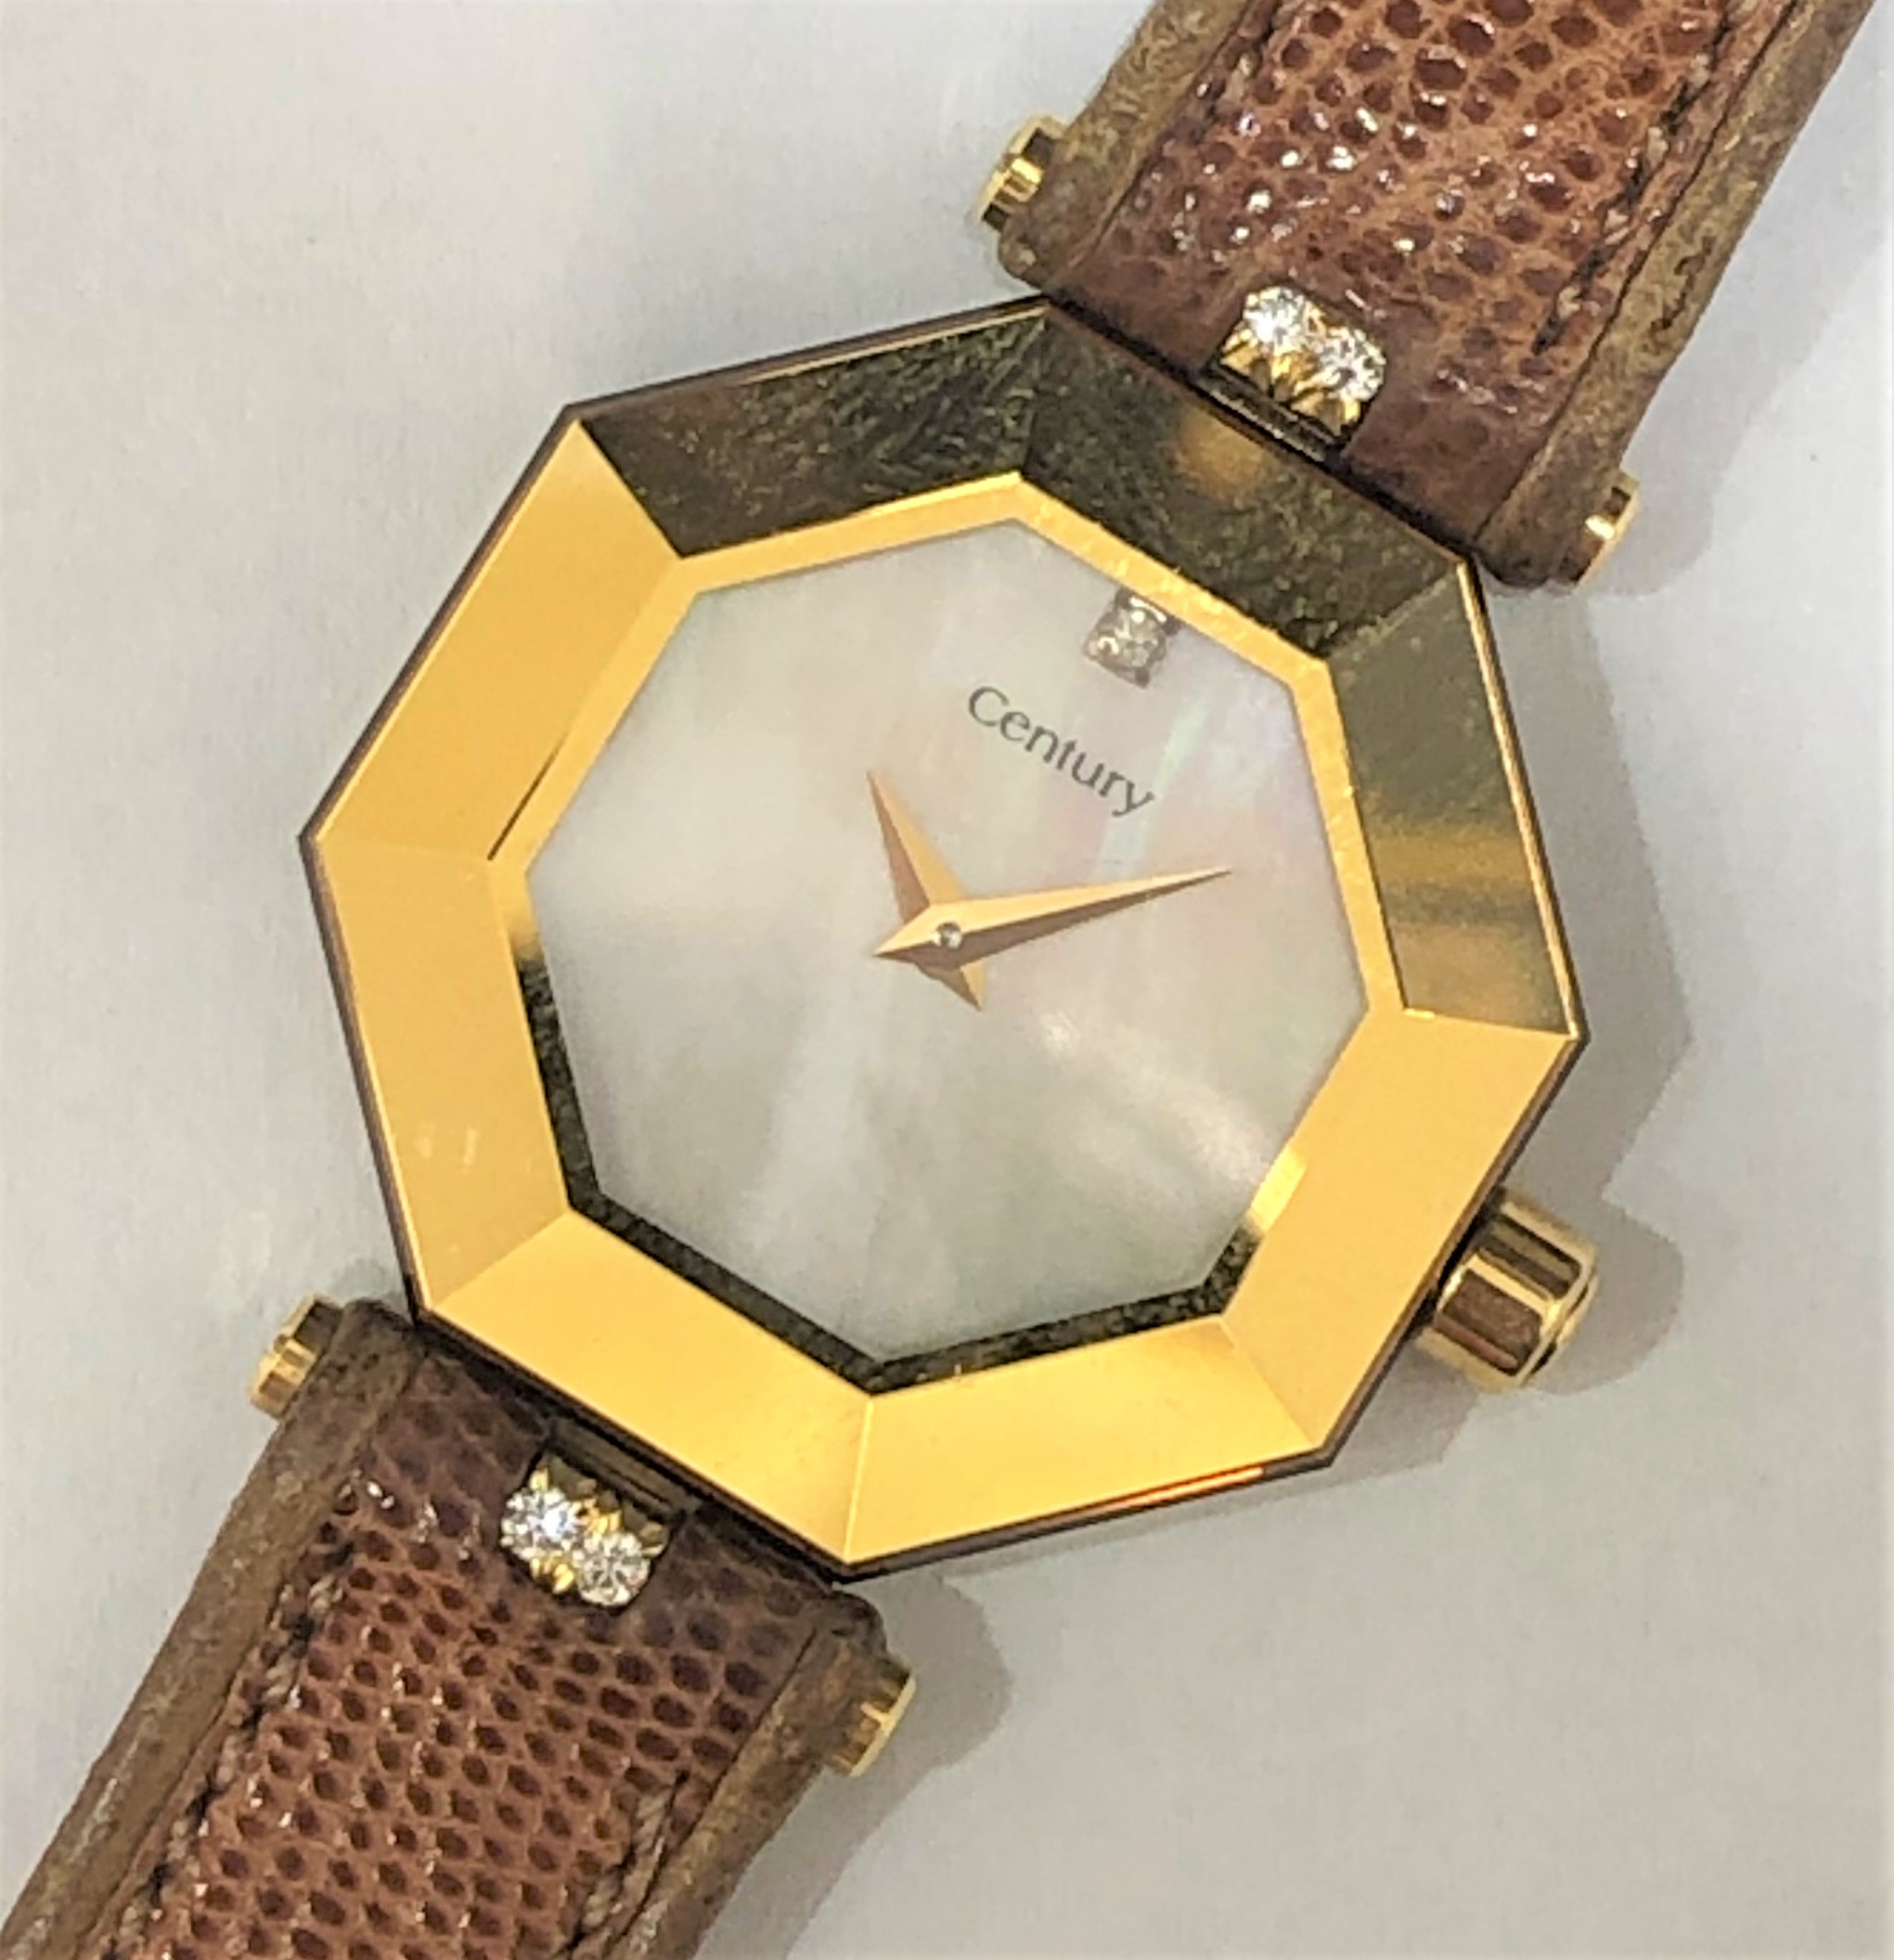 CENTURY センチュリー 腕時計 750刻印 K18 ダイヤ付 シェル文字盤――――――